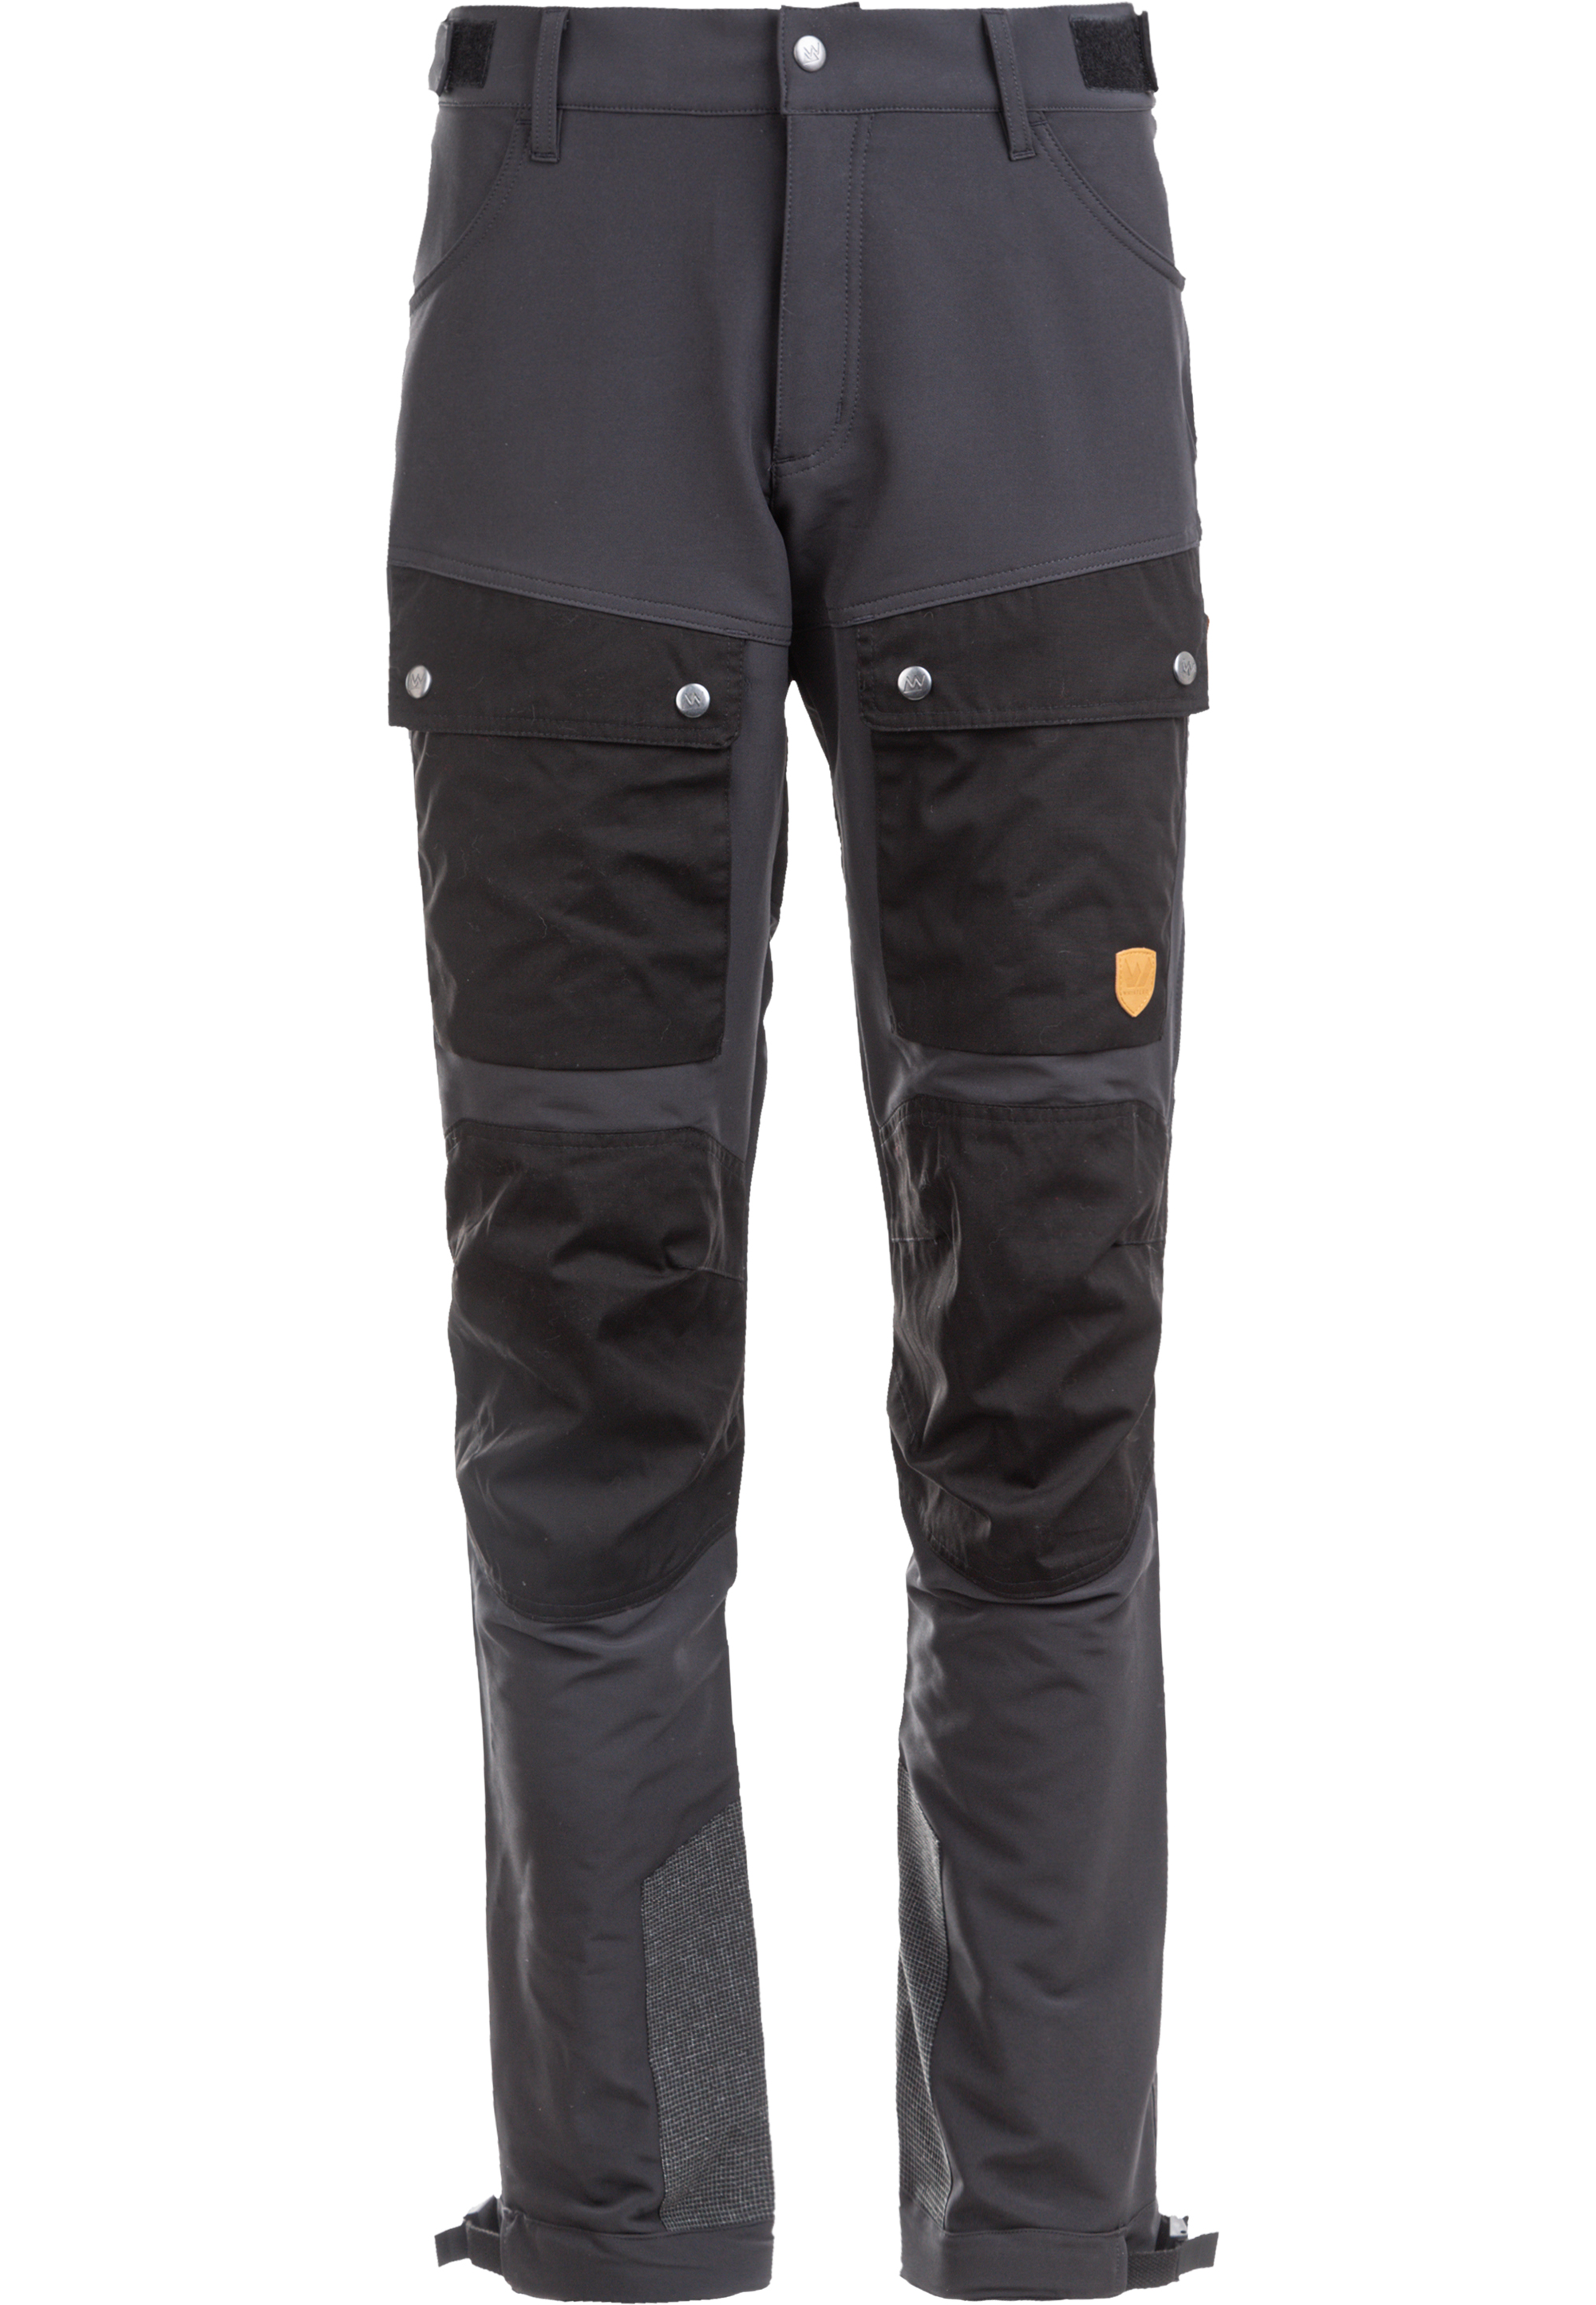 Тканевые брюки Whistler Trekking BEINA M, цвет 1051 Asphalt тканевые брюки zigzag outdoor bono цвет 1051 asphalt